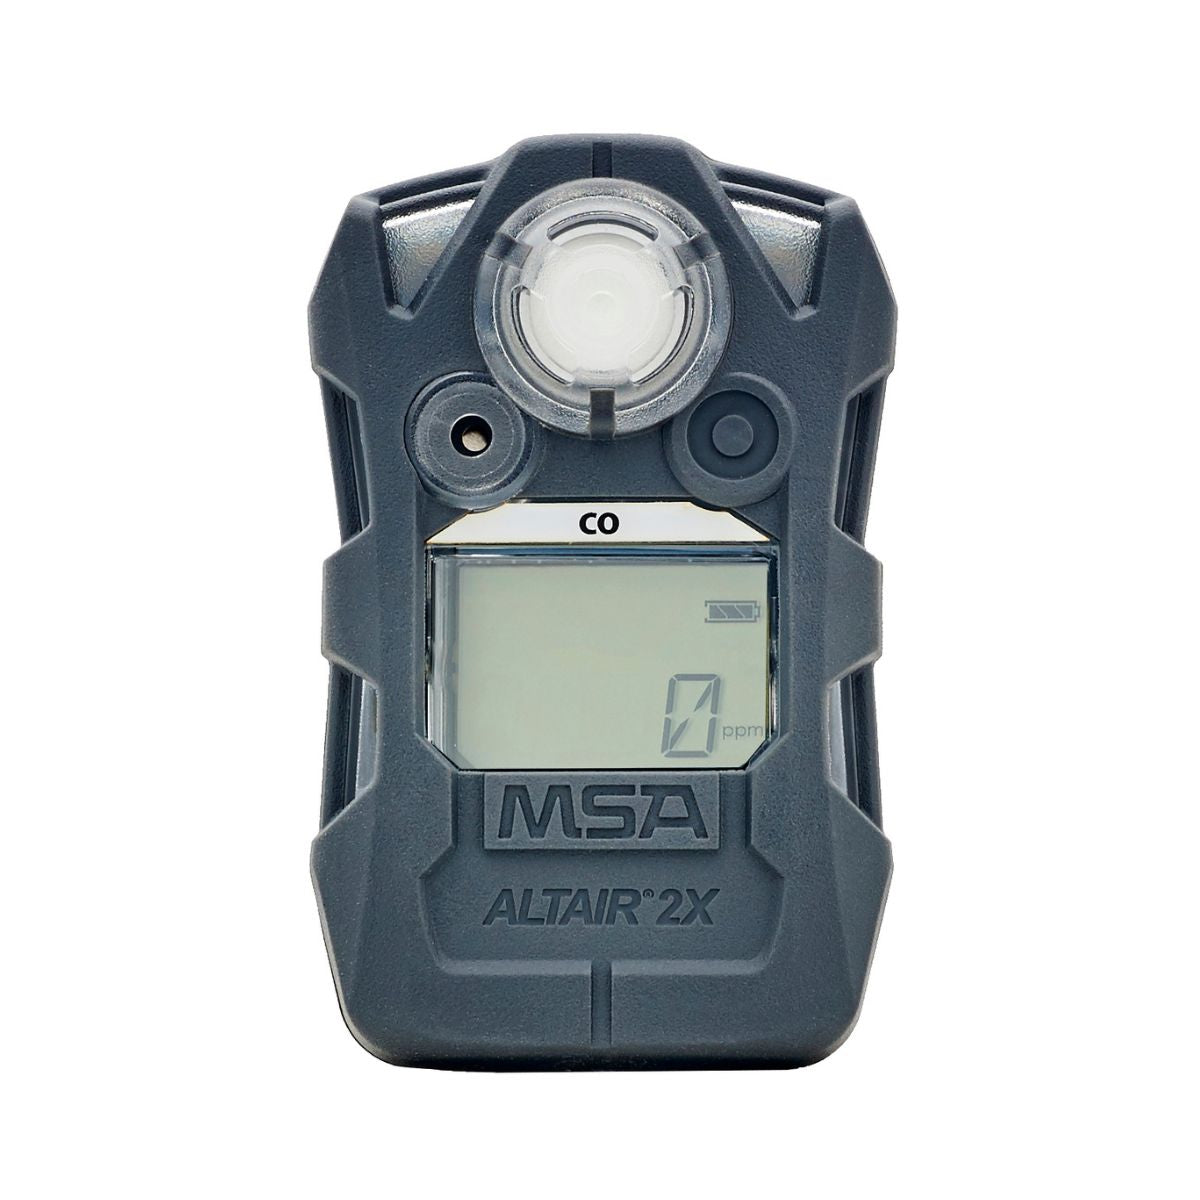 Gasmessgerät MSA Altair 2X mit CO Sensor. Farbe: Anthrazit - Scheureder  PROTECT YOU, TO RESCUE!